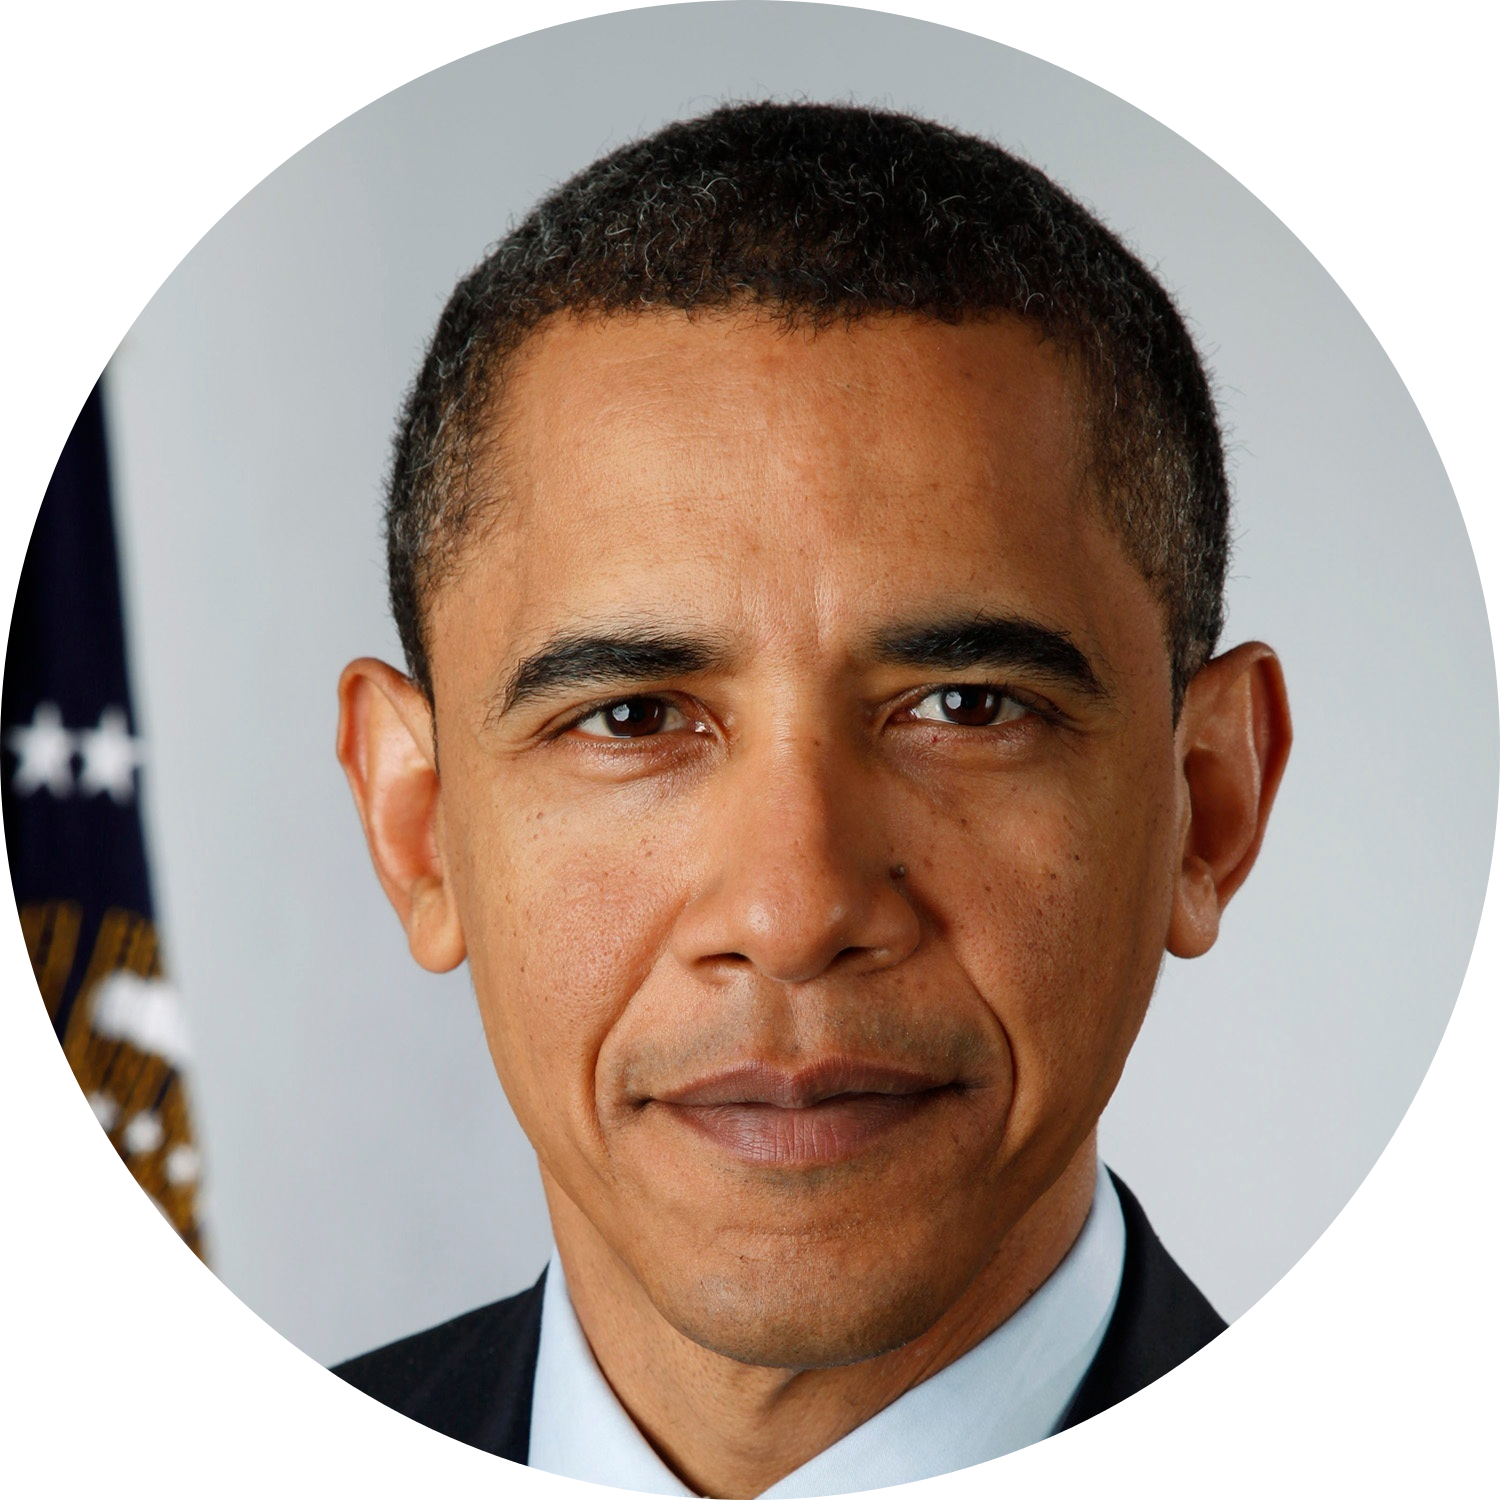 Barack Obama Circle - Barack Obama In A Circle (1024x1024), Png Download